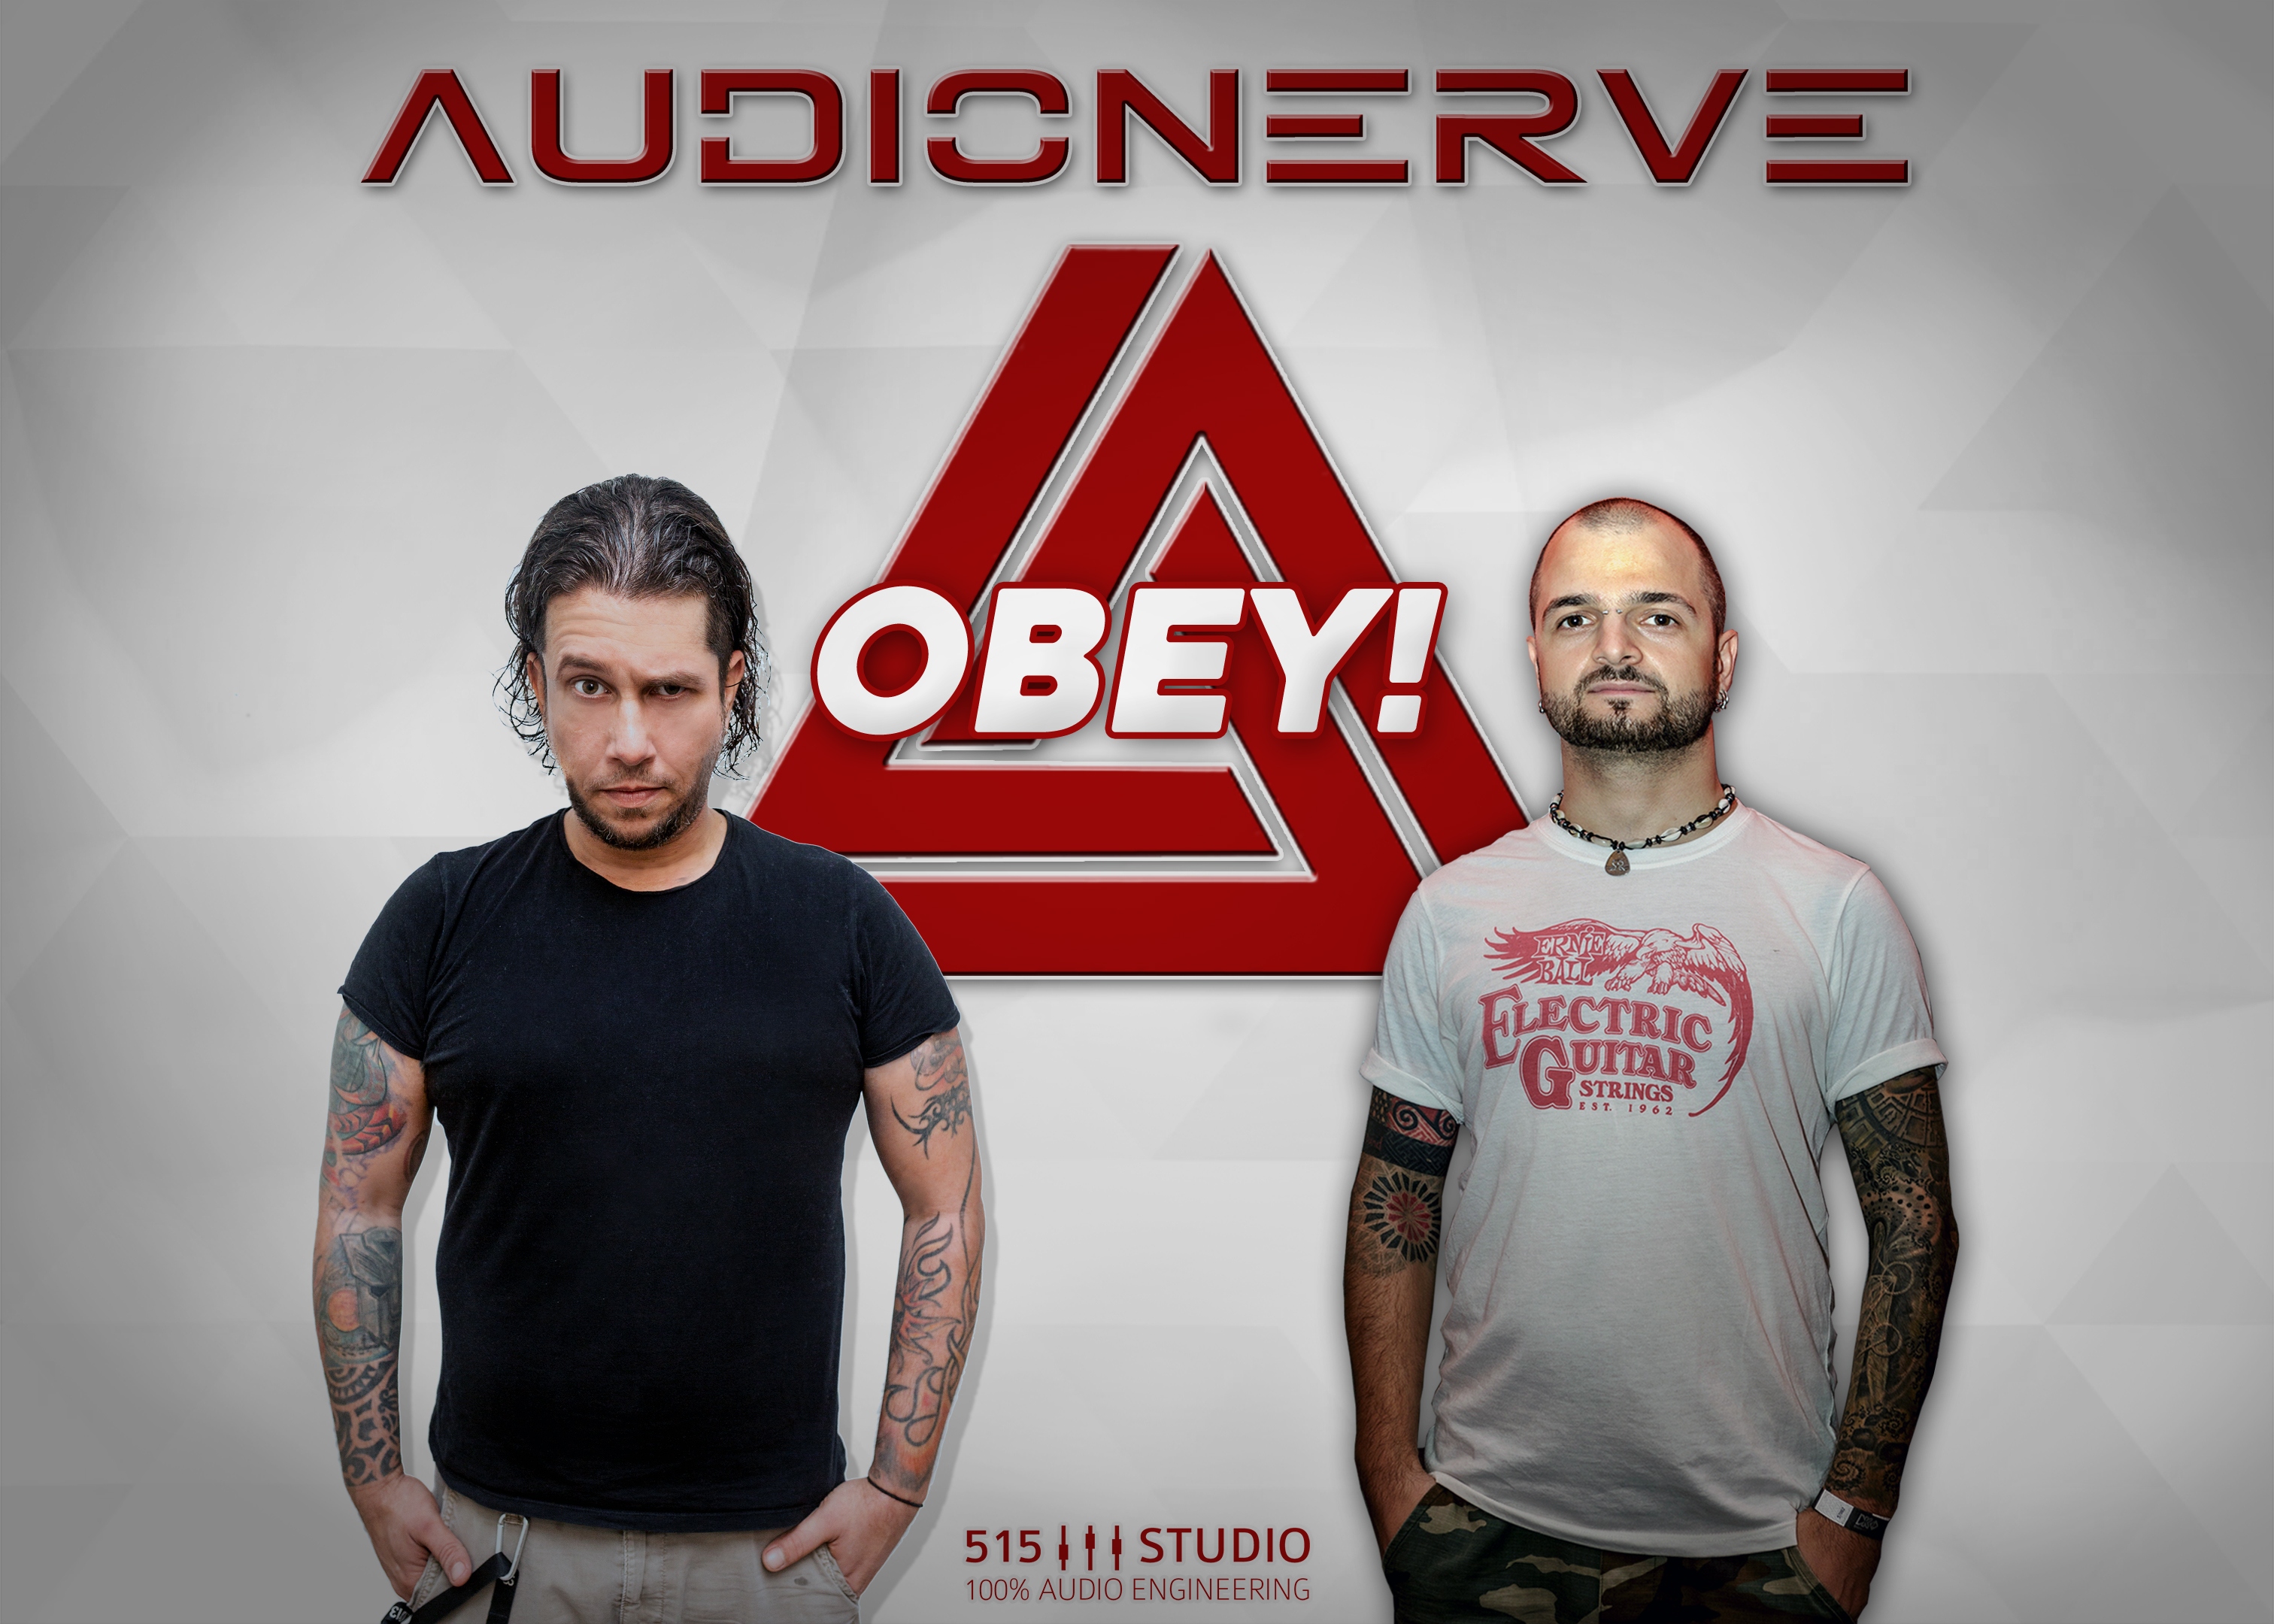 audionerve-obey_promo.jpg